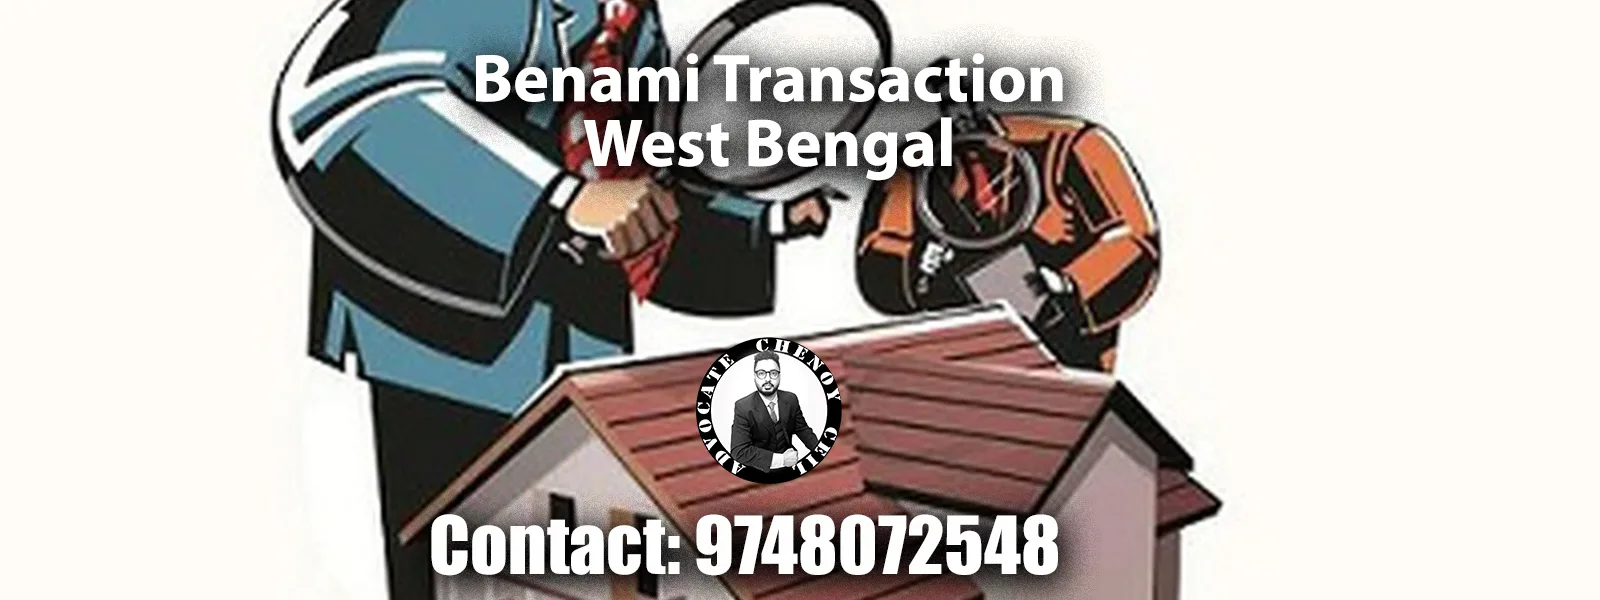 Benami Transaction West Bengal